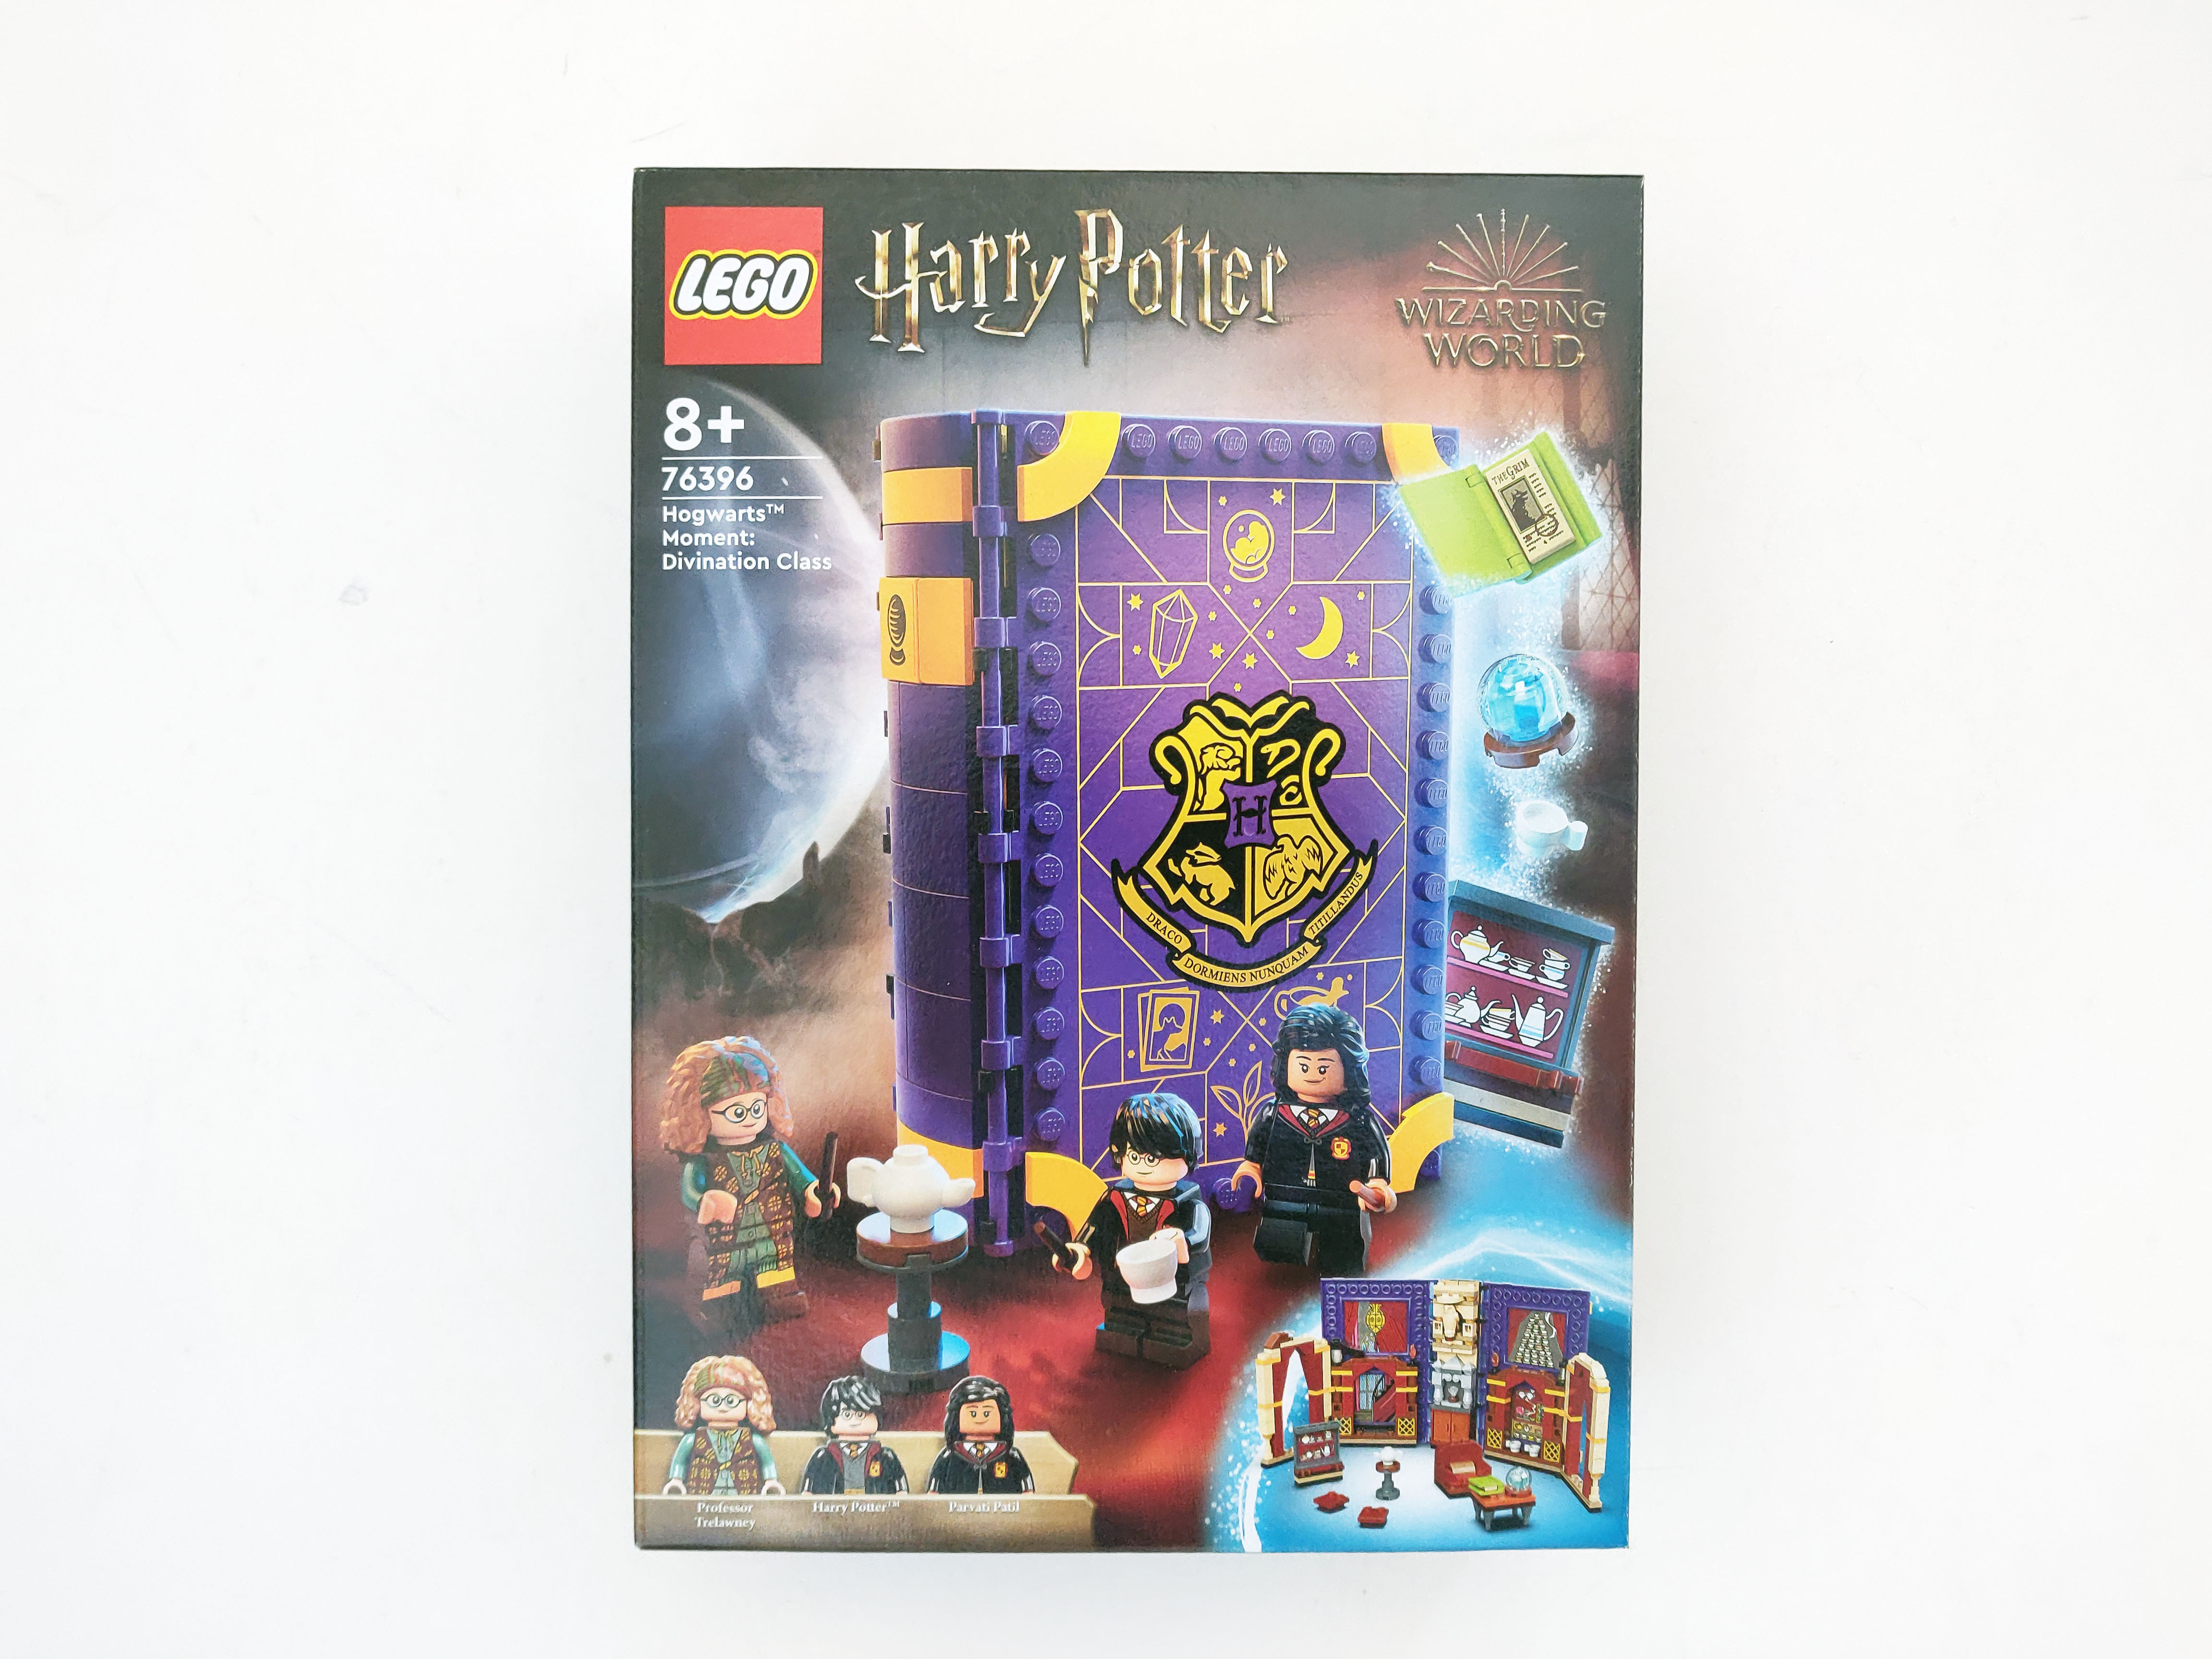 lego-harry-potter-hogwarts-moment-divination-class-76396-review